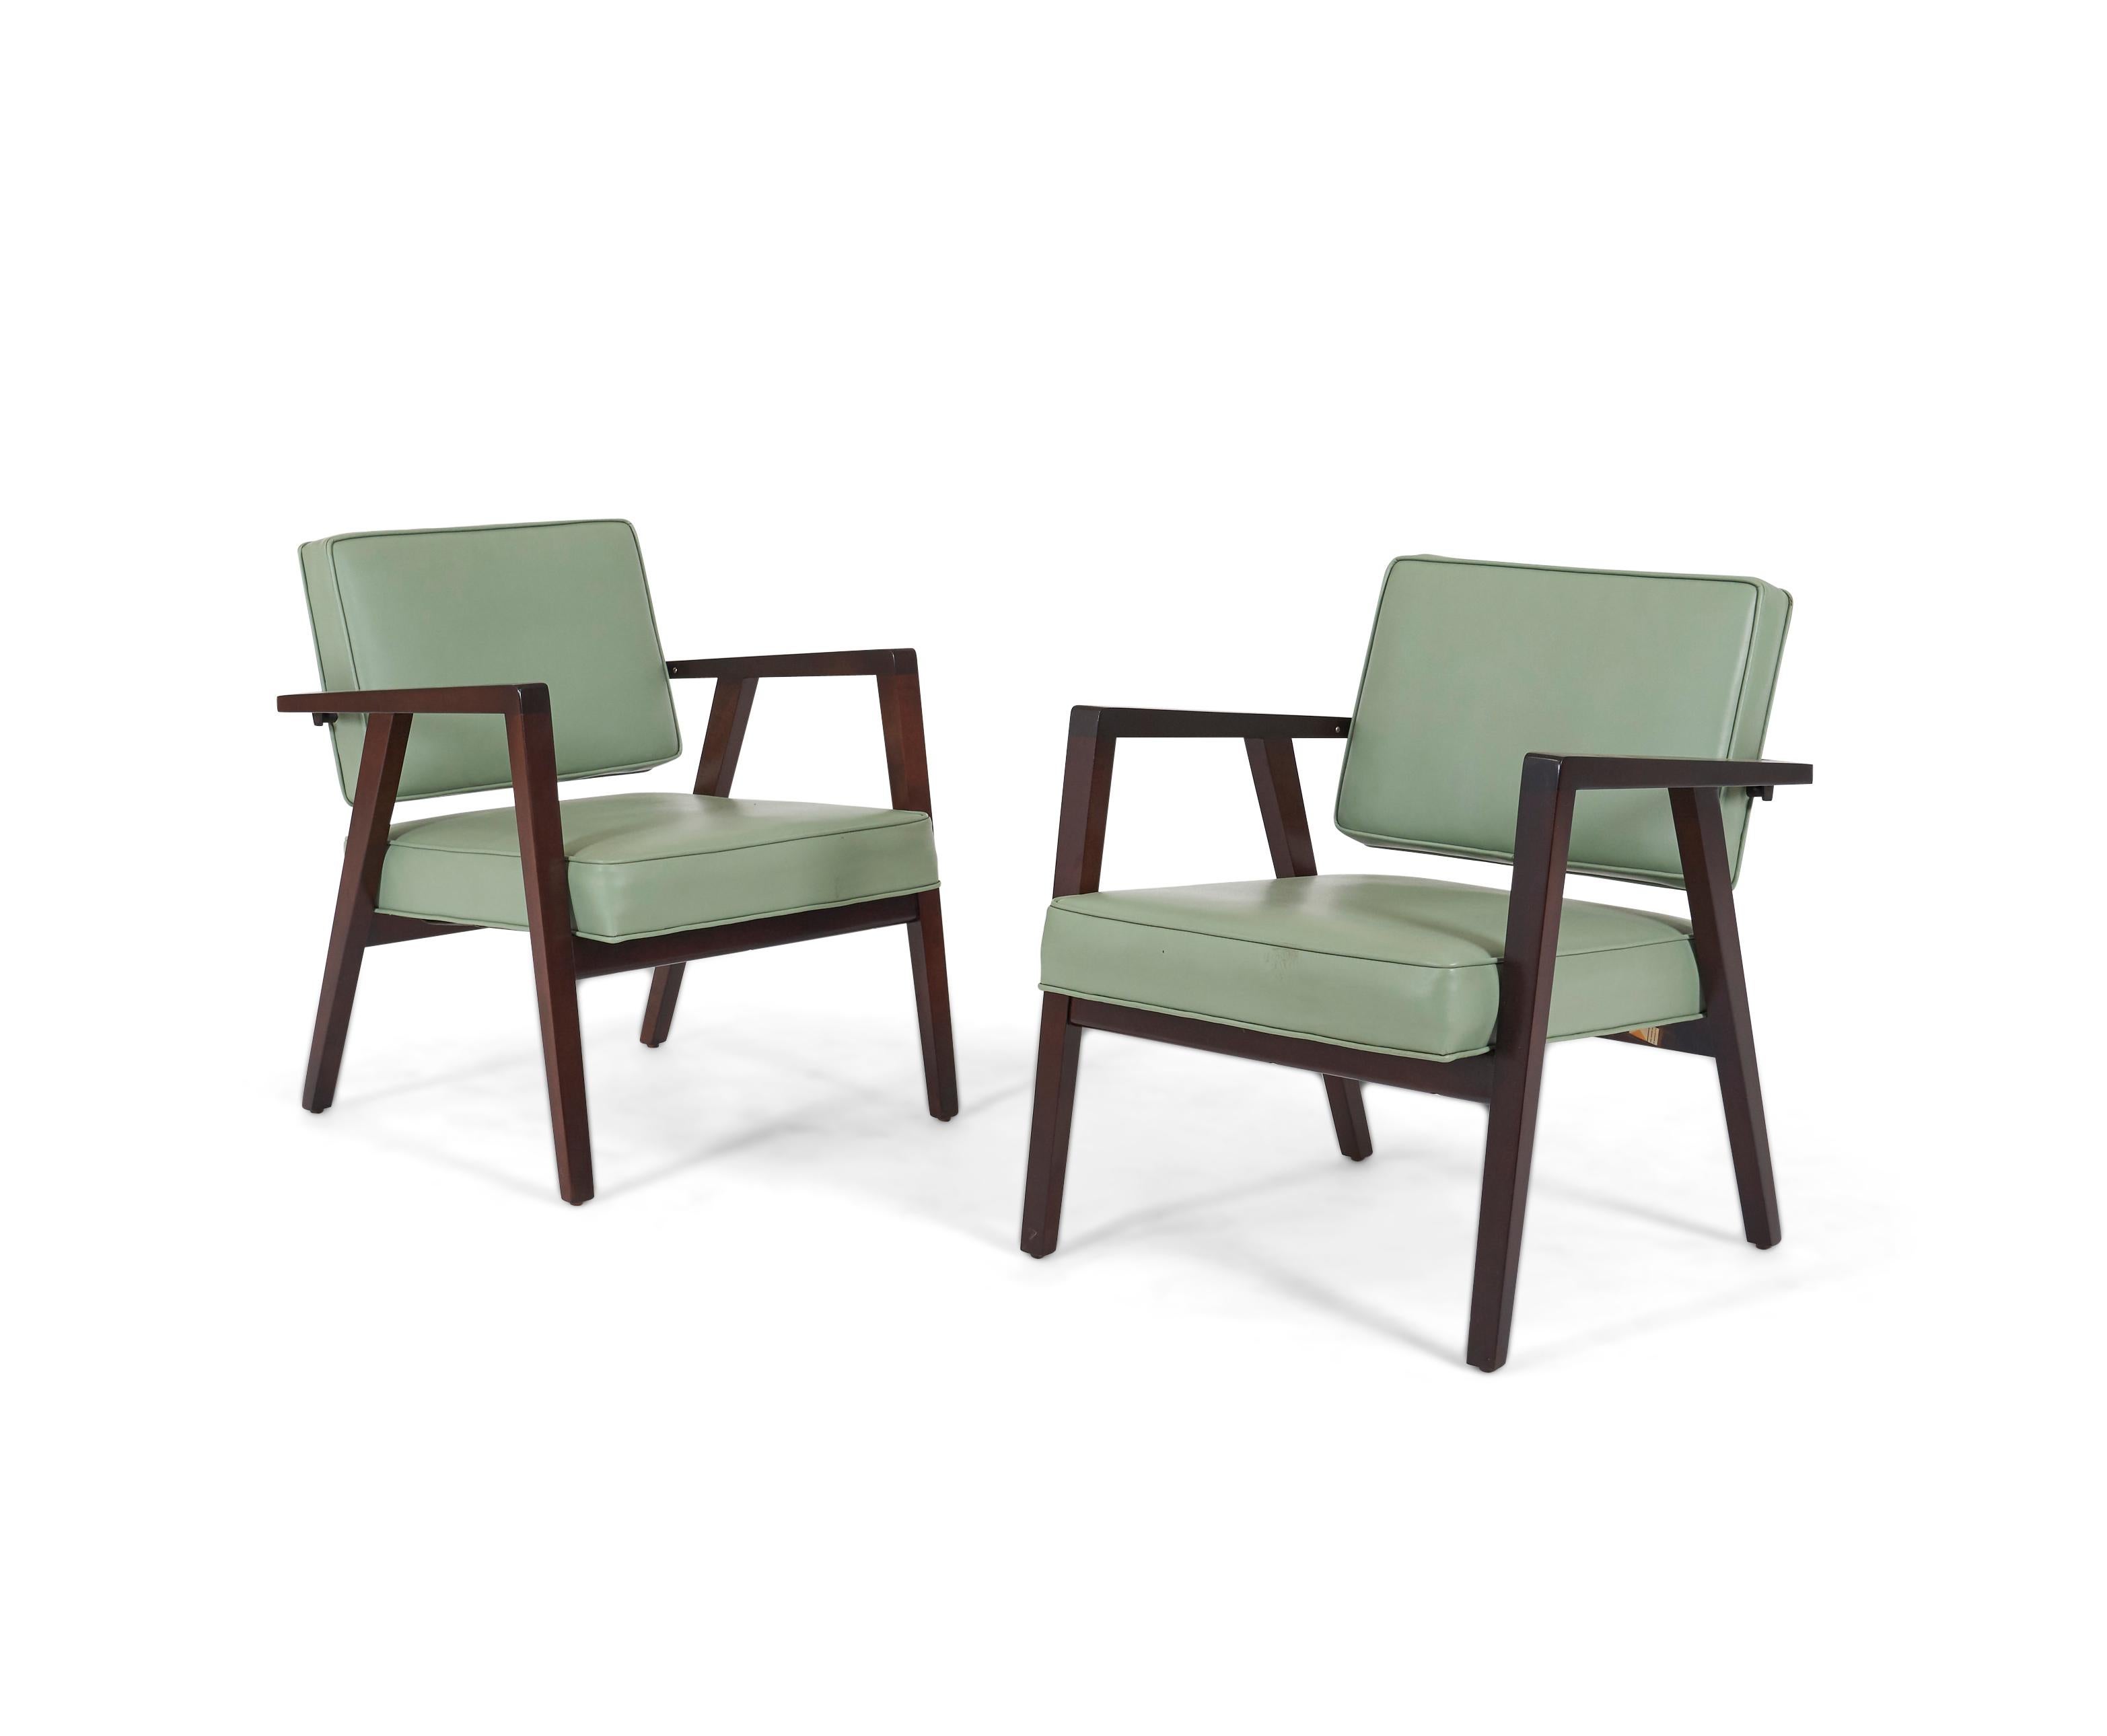 Mid-Century Modern Franco Albini Lounge chairs, Knoll, 1952